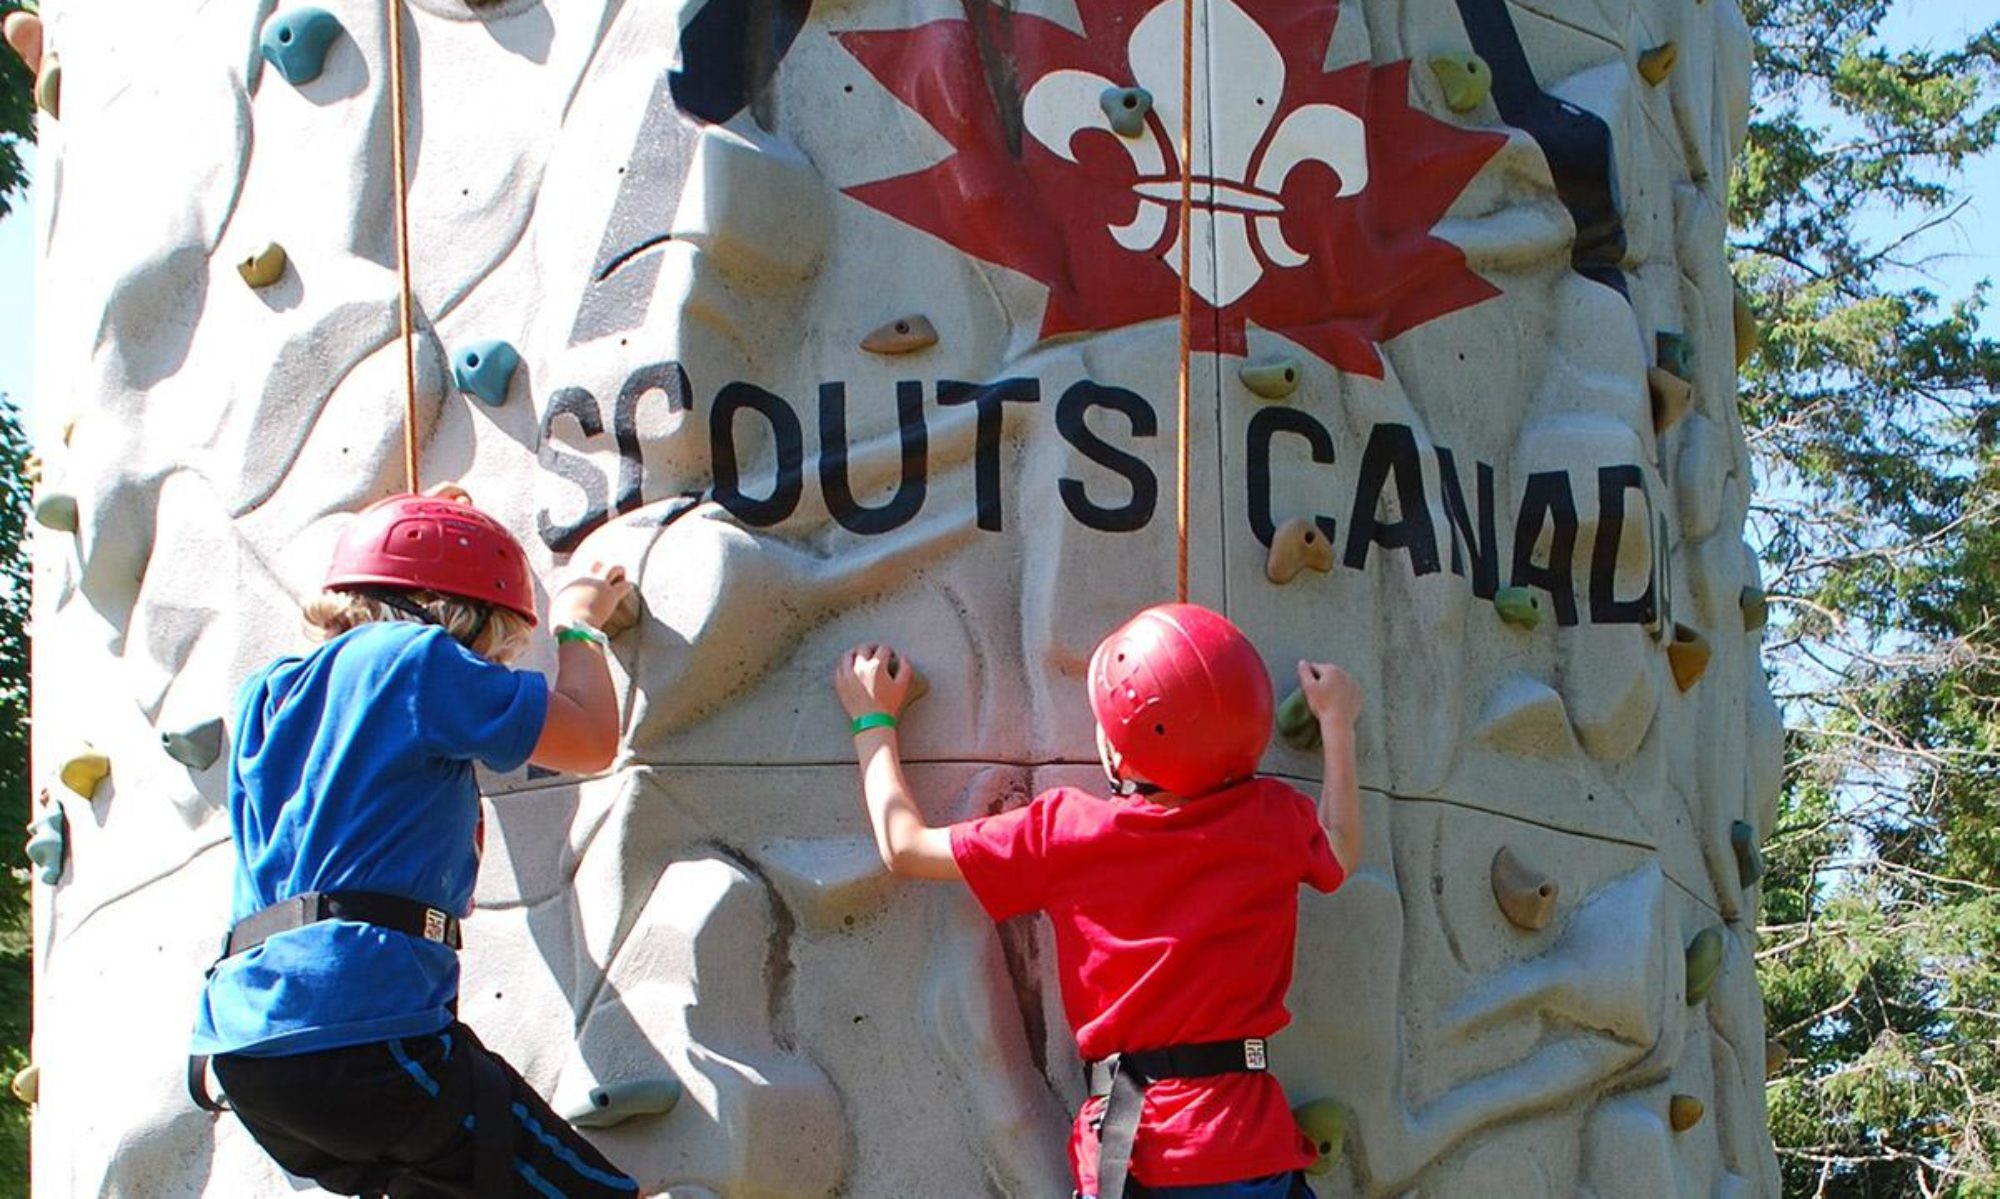 Scouts Canada Quebec Council